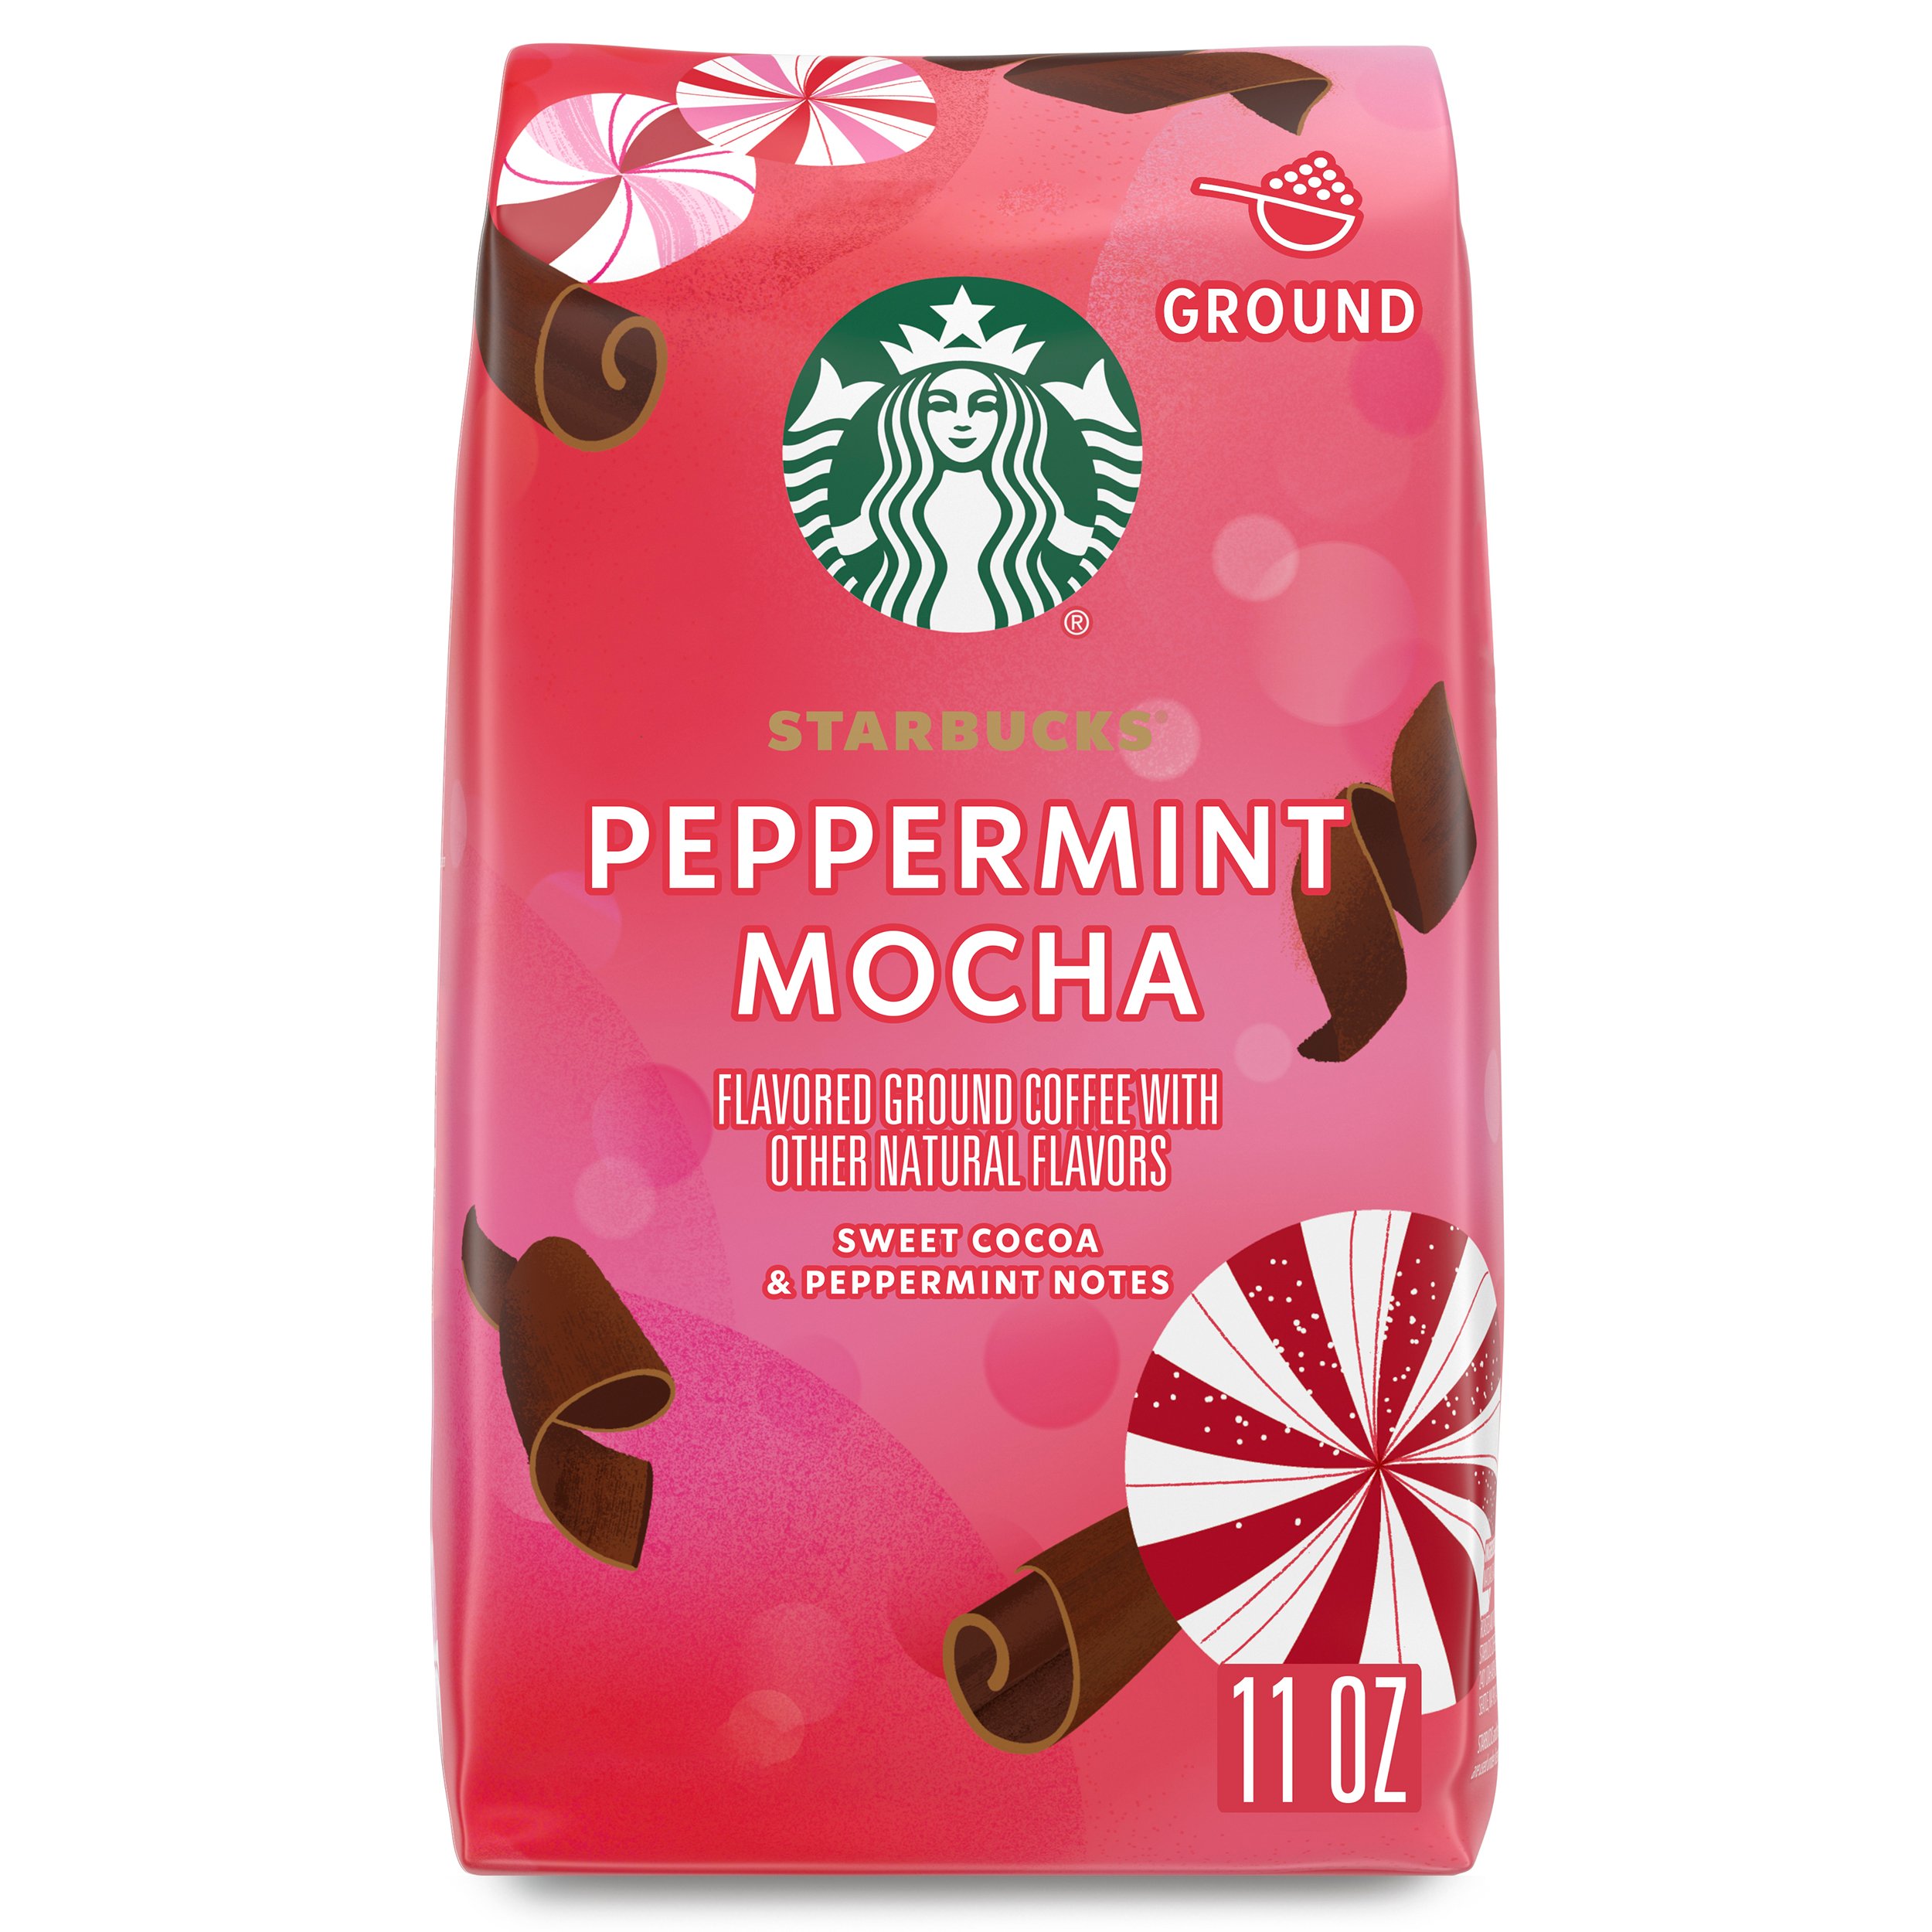 Starbucks Peppermint Mocha Ground Coffee Shop Coffee at